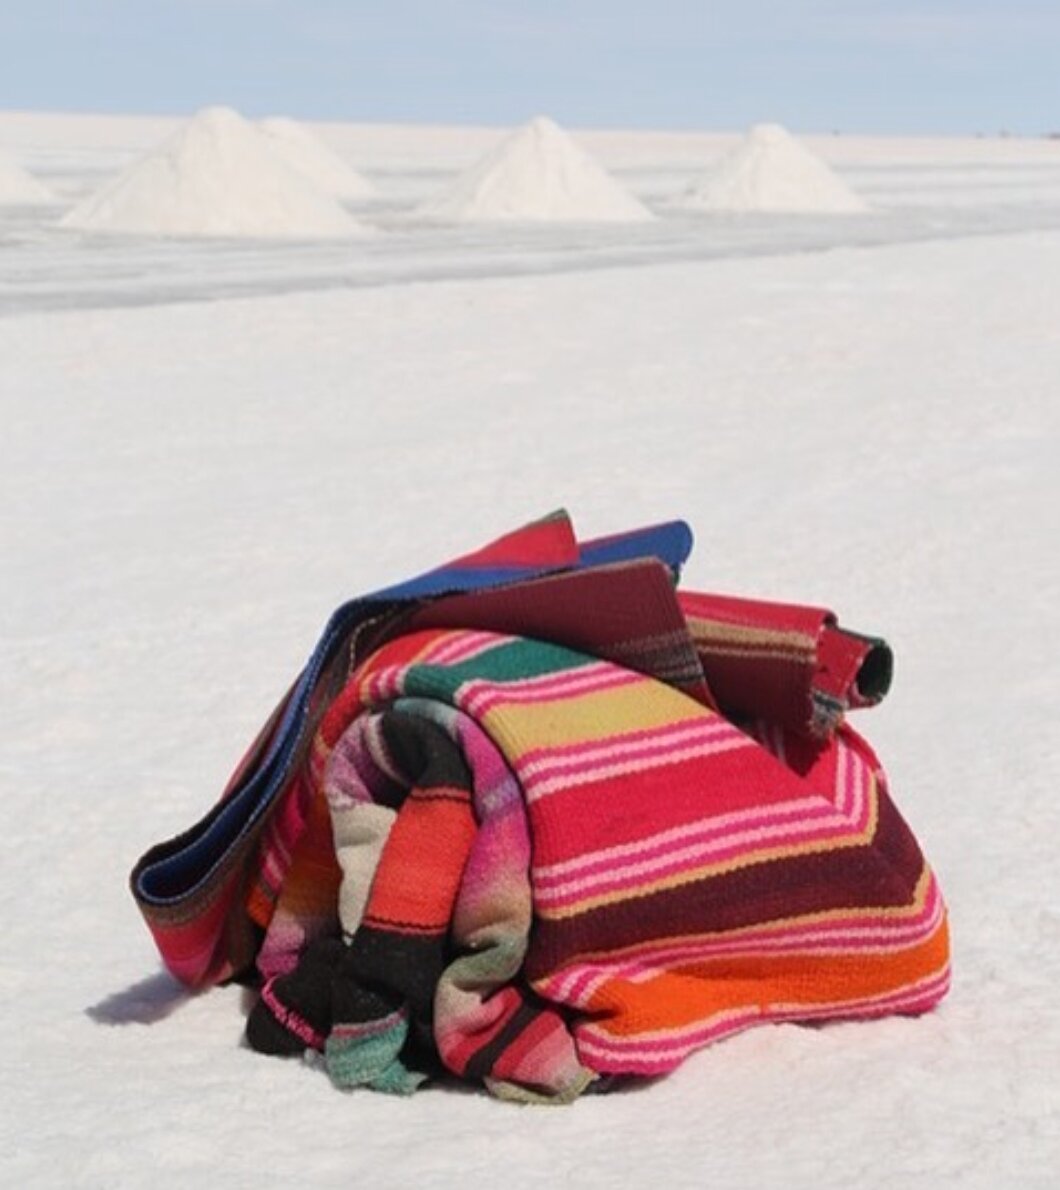 Gaston Ugalde&acute;s textile installation in the Salt Flats.
*
*
*
*
*
#peru #bolivia #aracaritravel #aracariperu #travelinspiration #discoversouthamerica #luxurylifestyle #culture #meettheworld #travelcommunity #visitperu #travelperu #perutravel #s